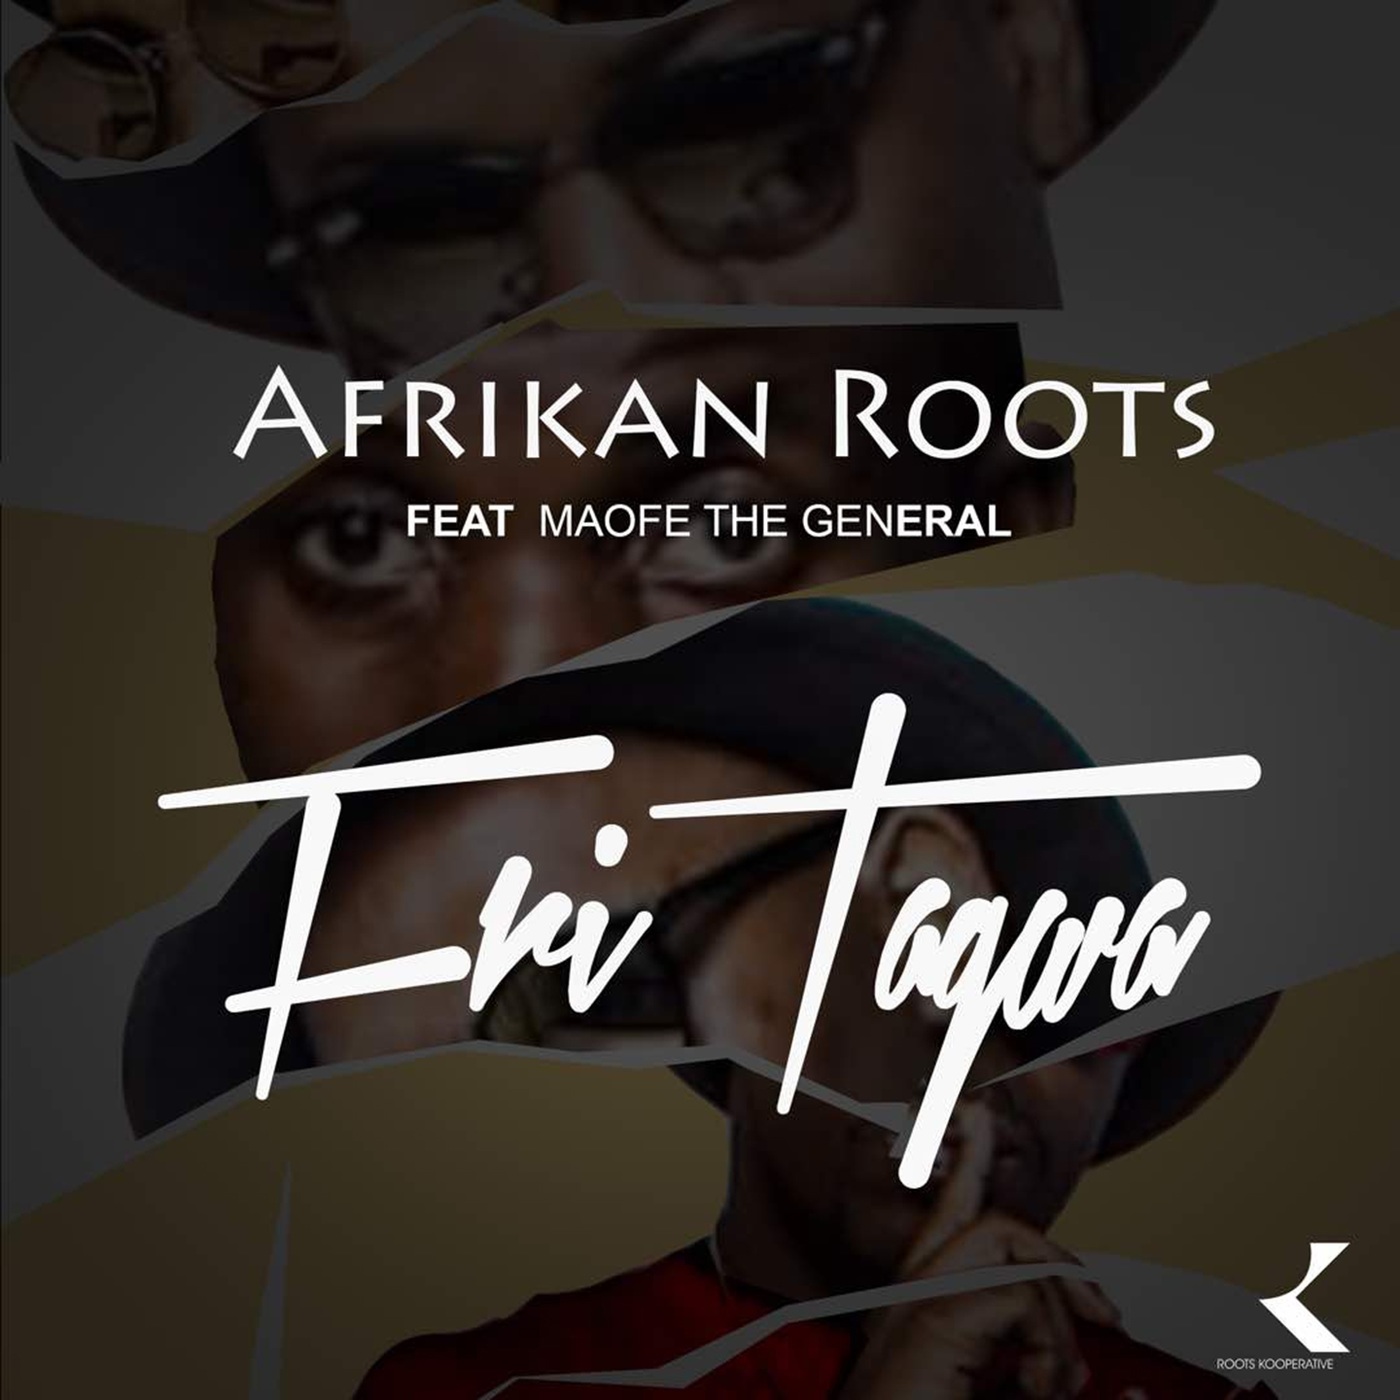 Afrikan Roots - FriTagwa / Roots Kooperative